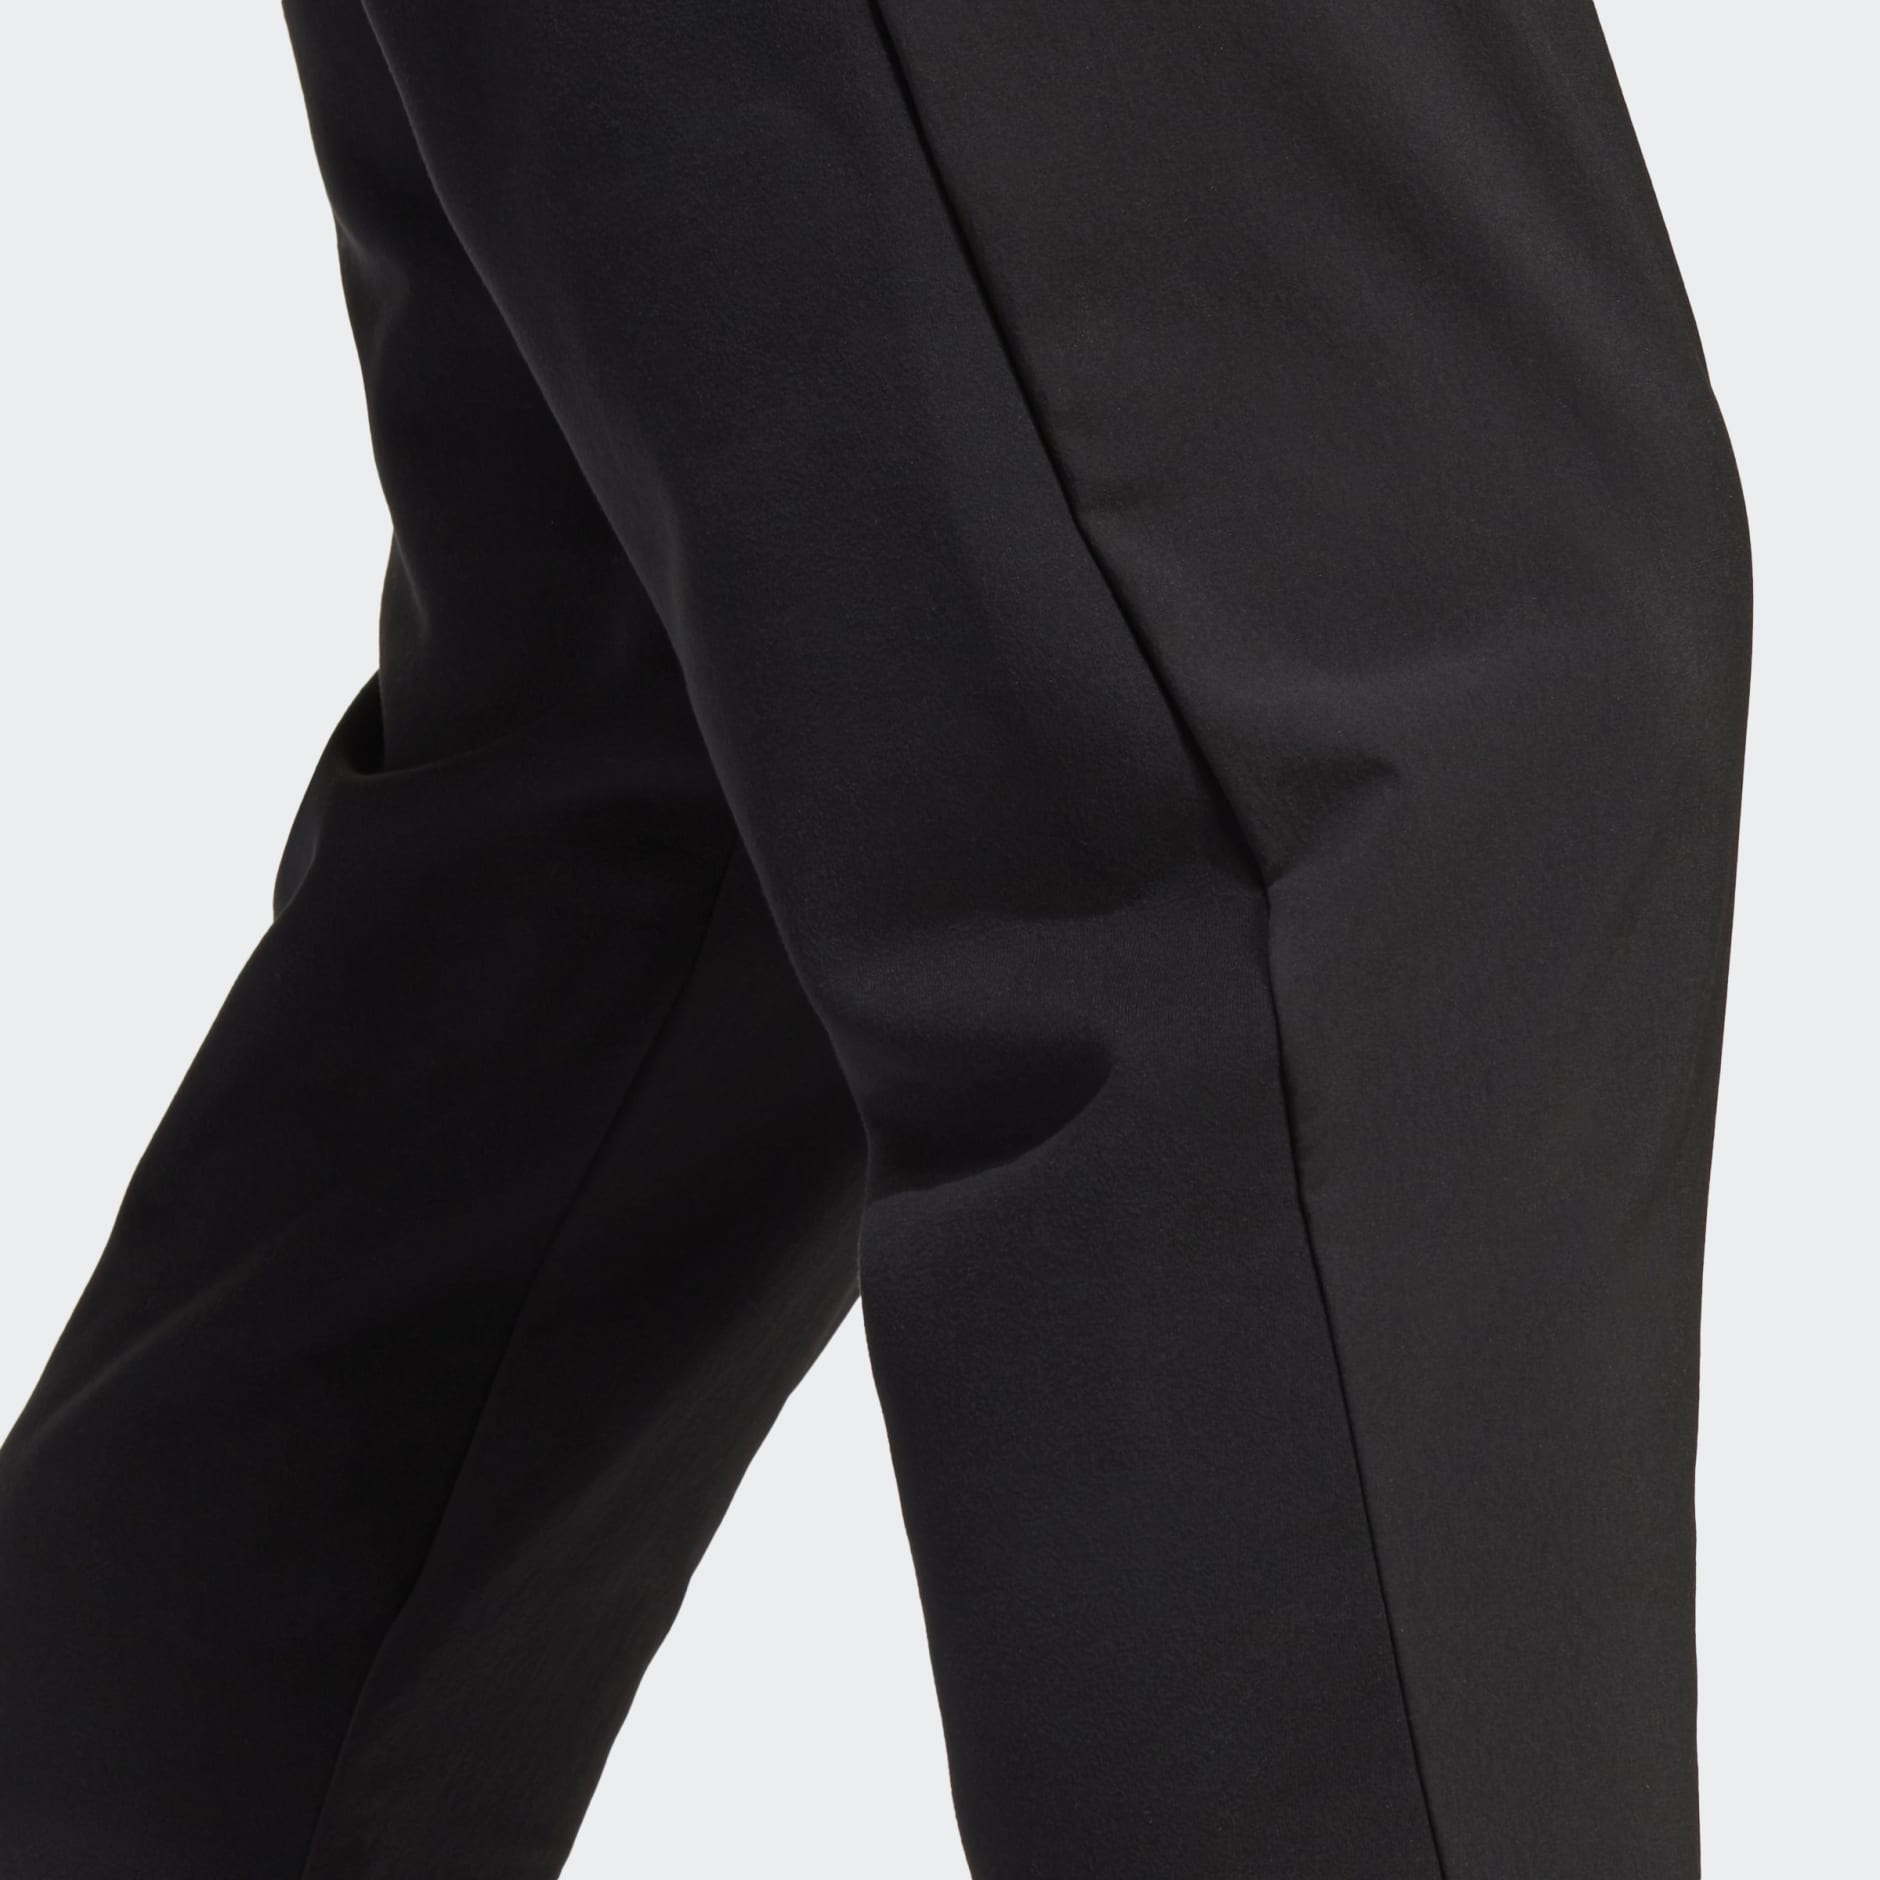  adidas Men's Designed 4 Game Day Pants, Black, Medium :  Clothing, Shoes & Jewelry